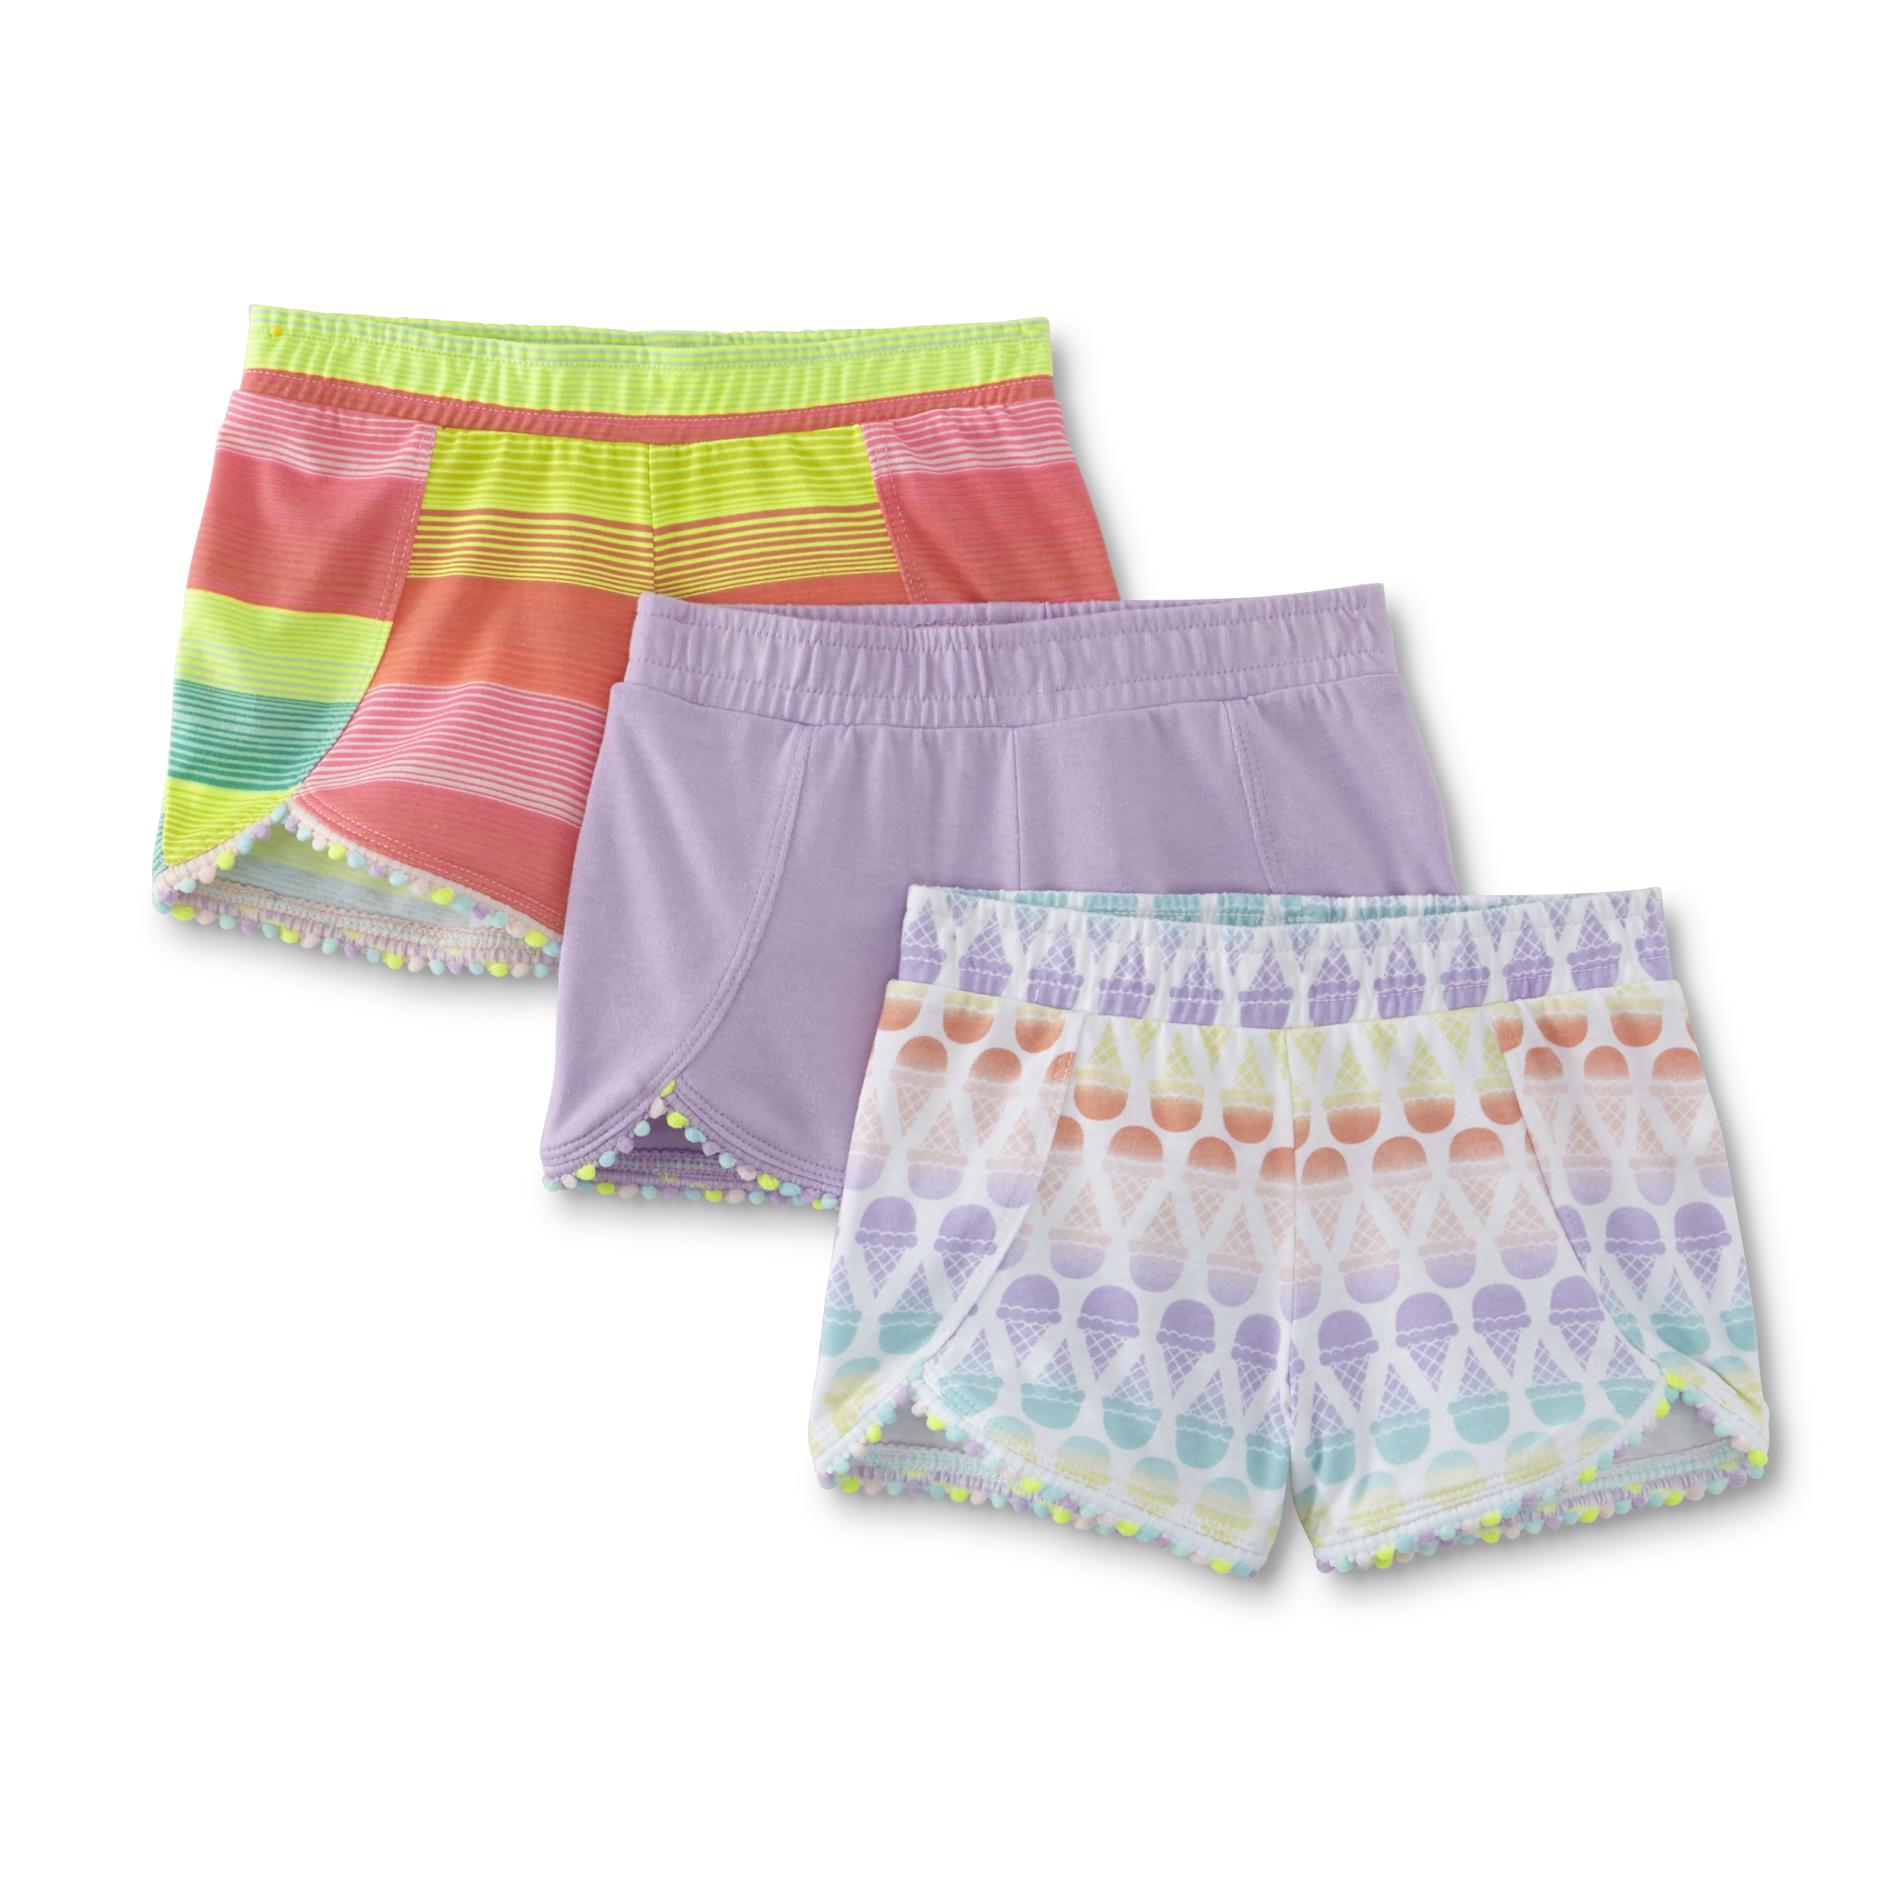 WonderKids Infant & Toddler Girls' 3-Pack Shorts - Striped & Ice Cream